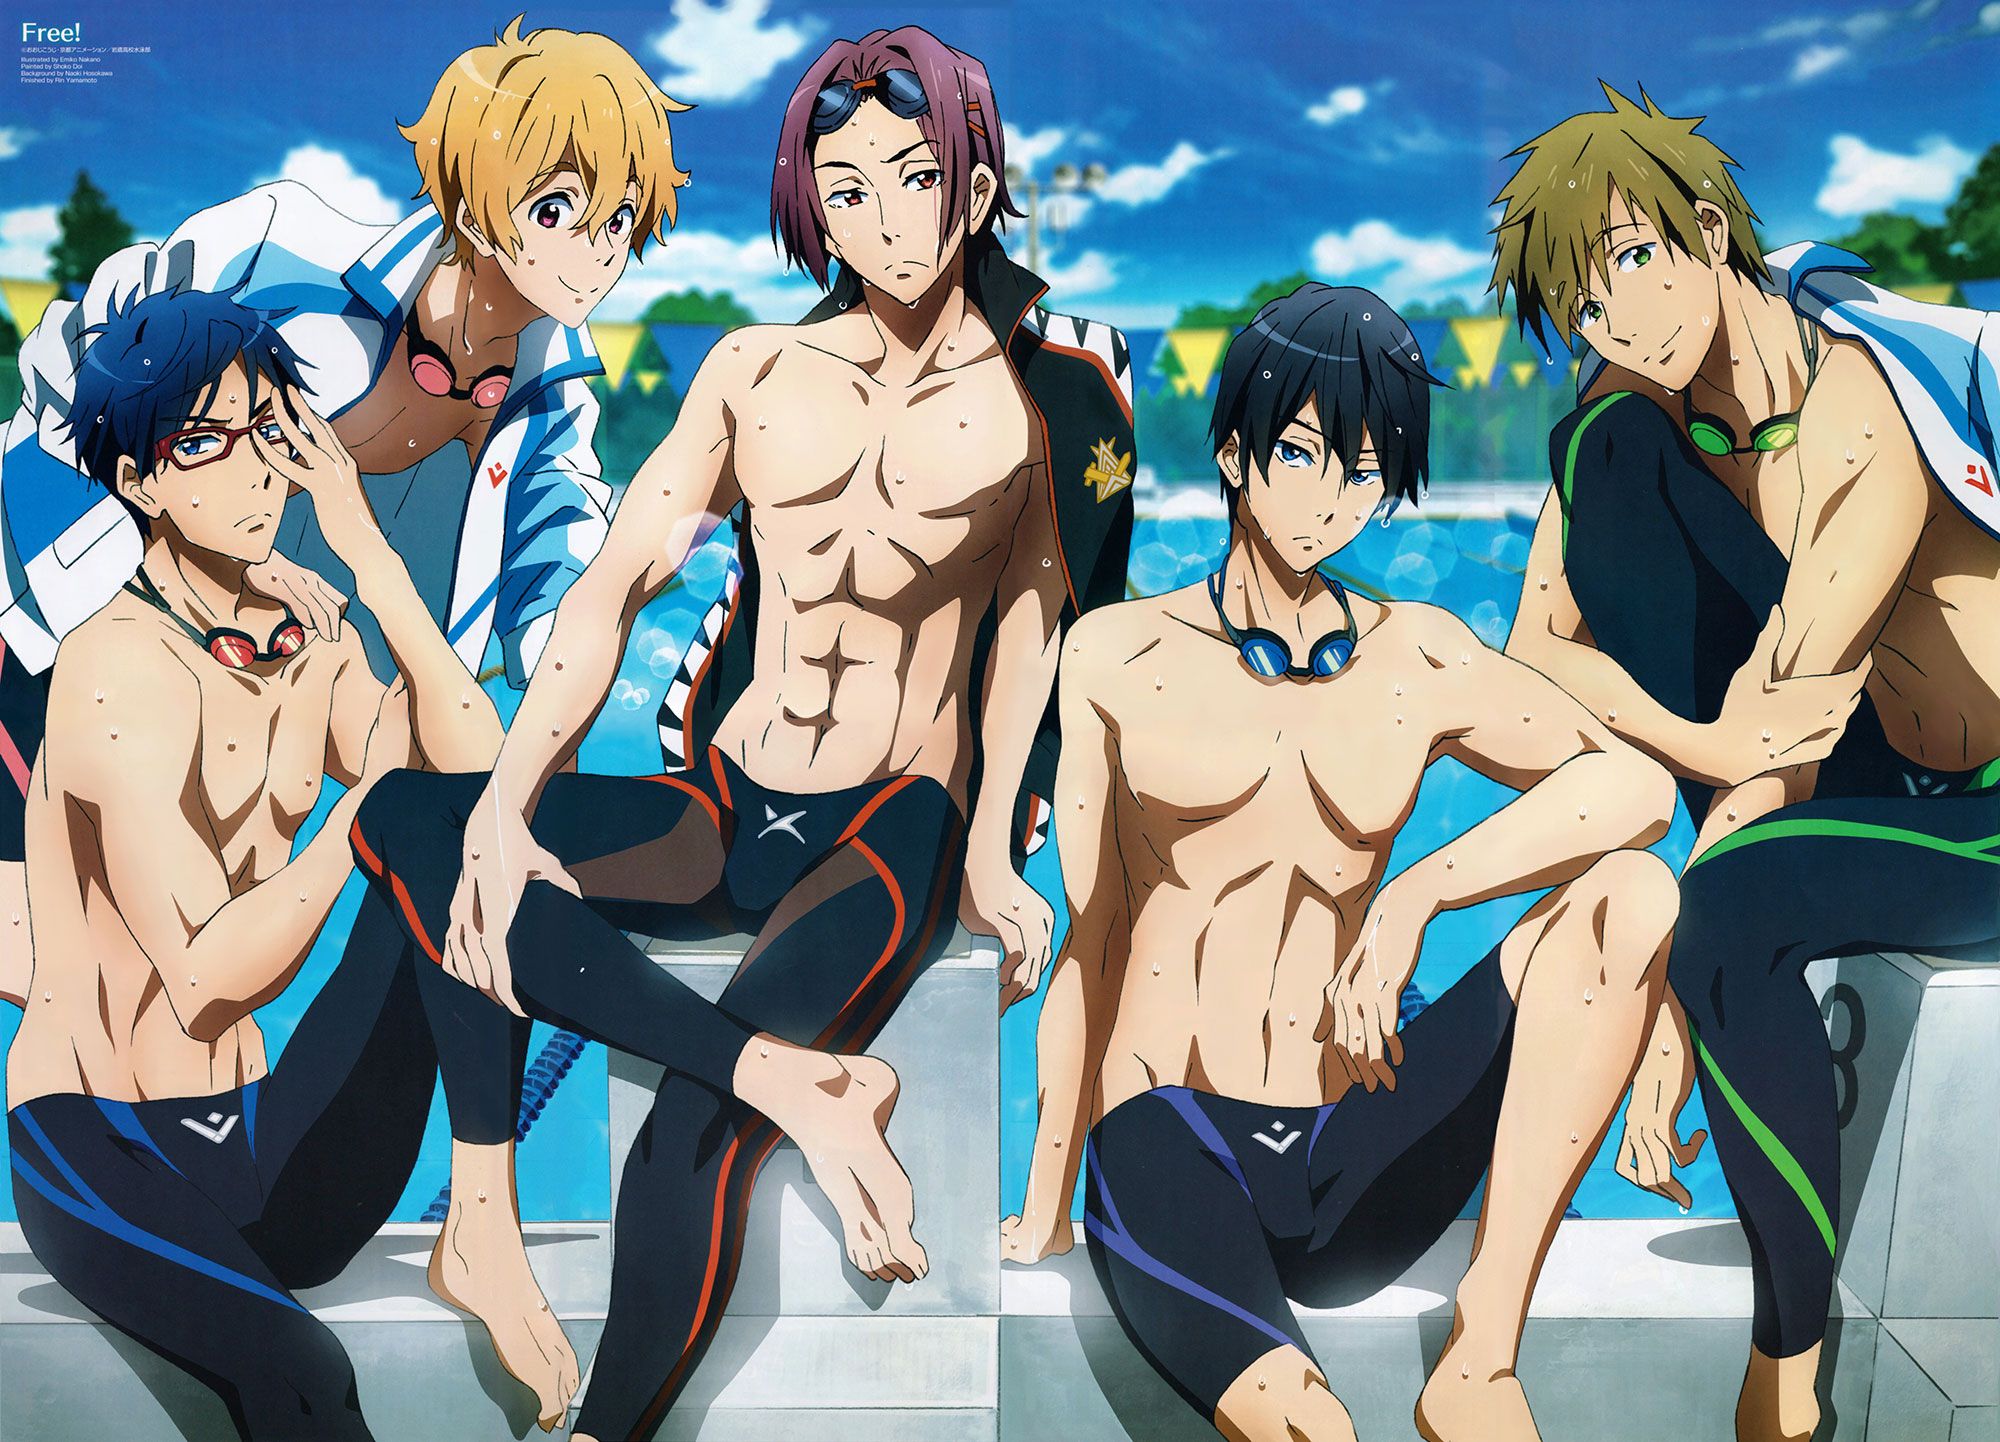 Anime Review: “Free! Iwatobi Swim Club”. Anrisa's Anime